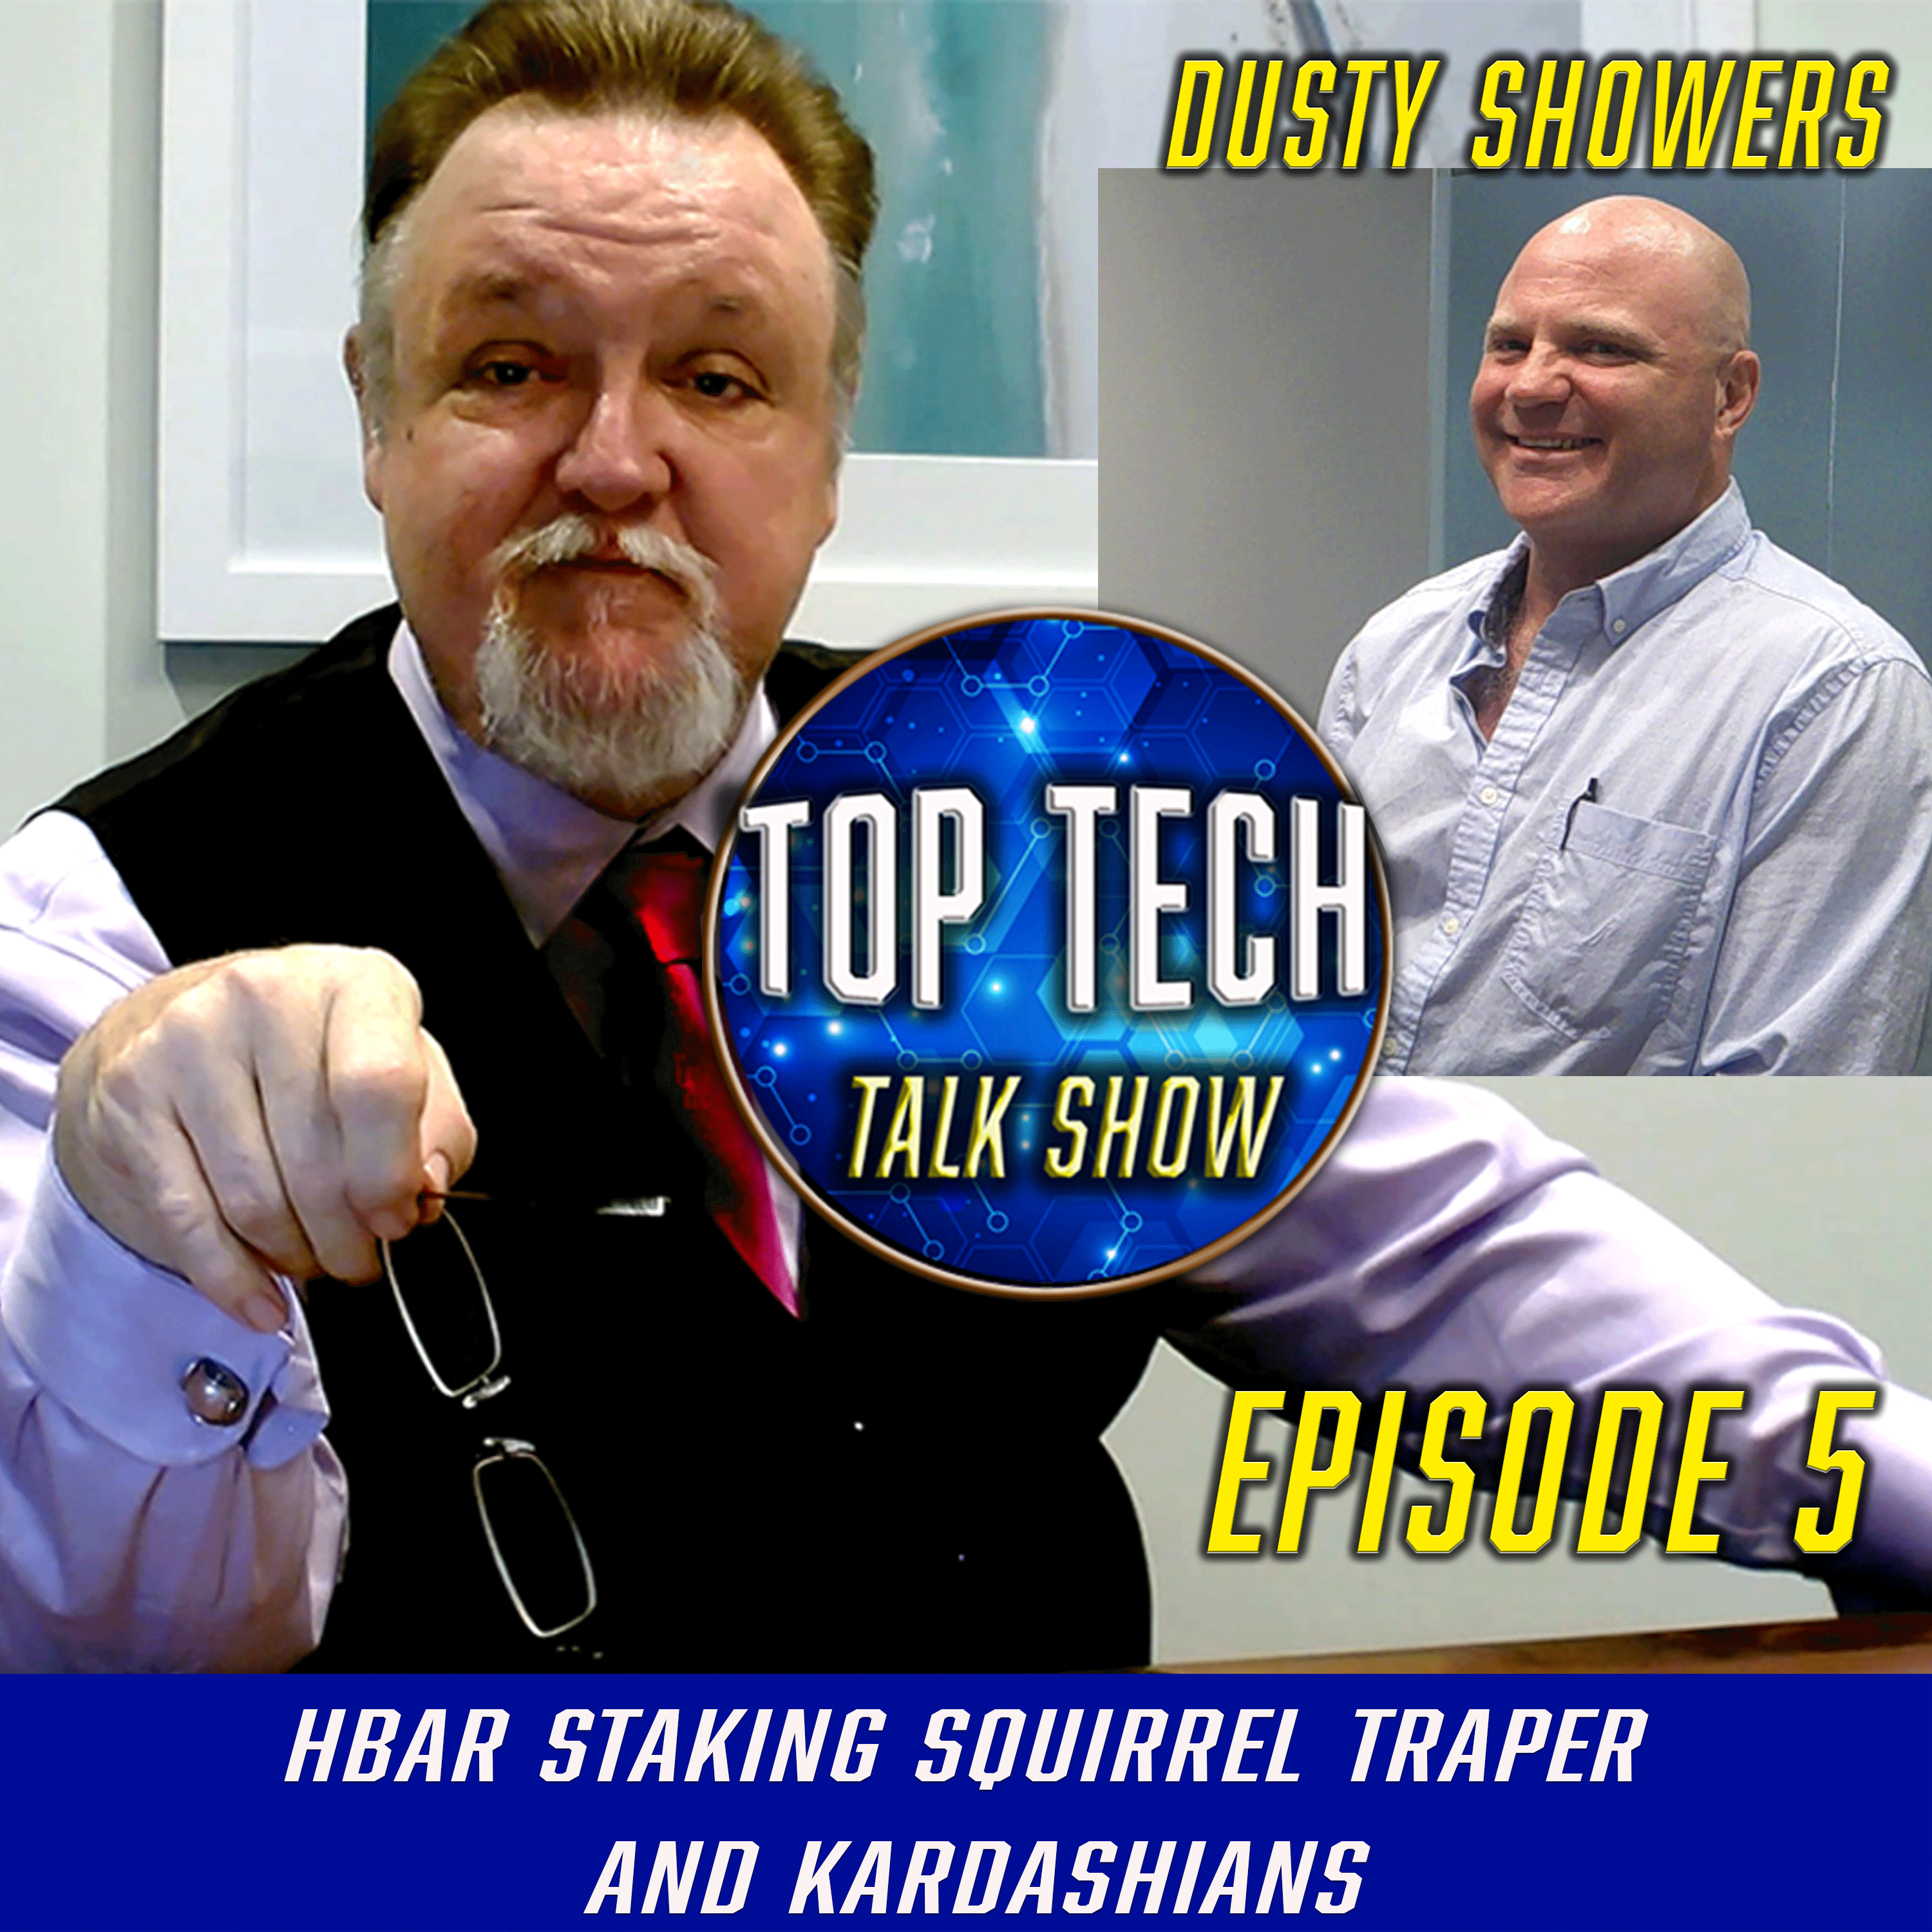 Episode 5 – Dusty Showers – HBAR staking Squirrel Trapper